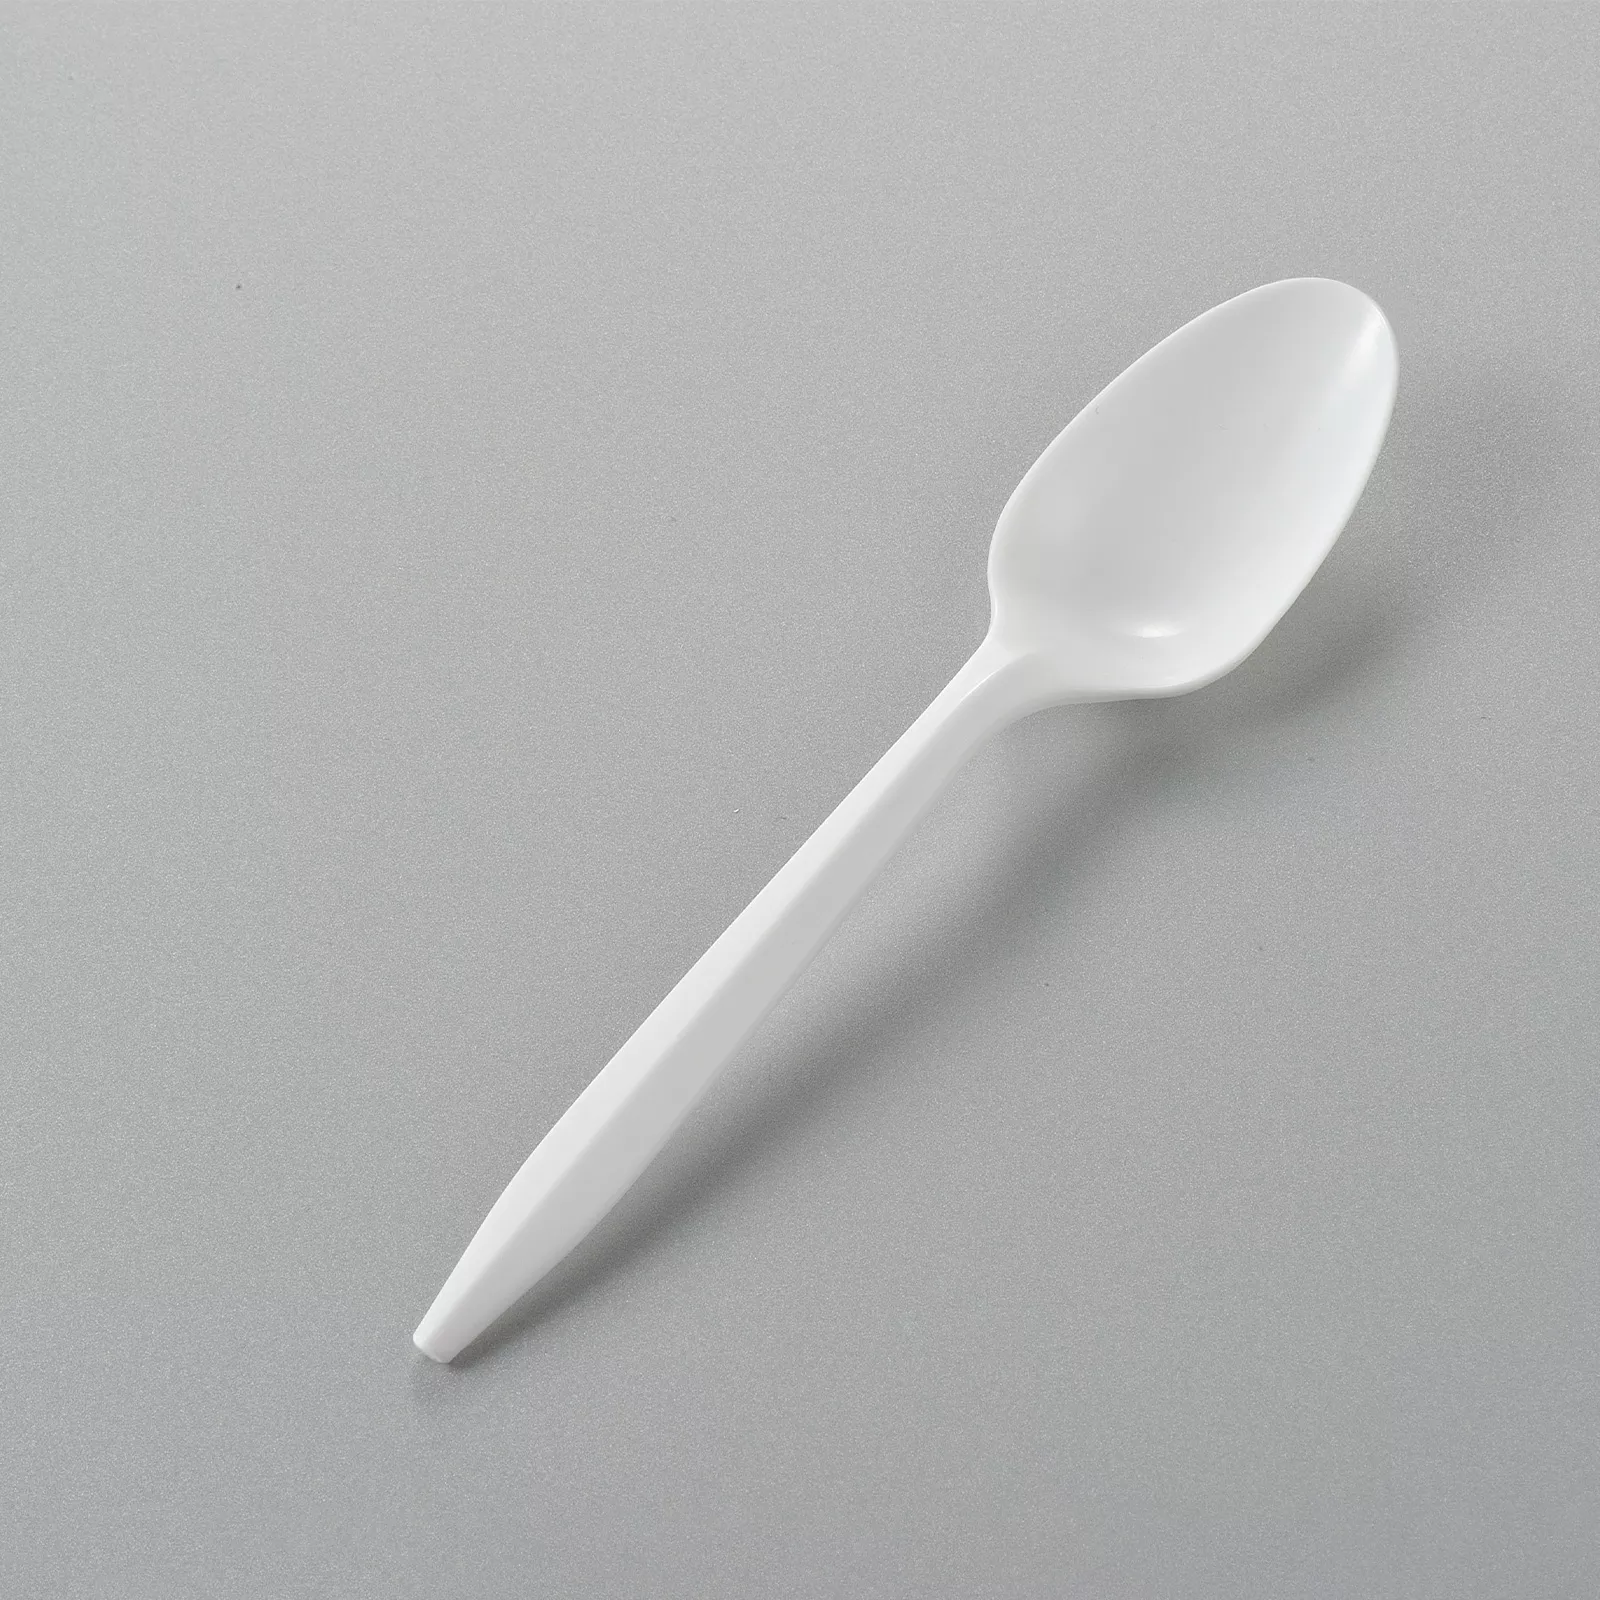 SY-PPC01 Medaim Weight Plastic Teaspoon White